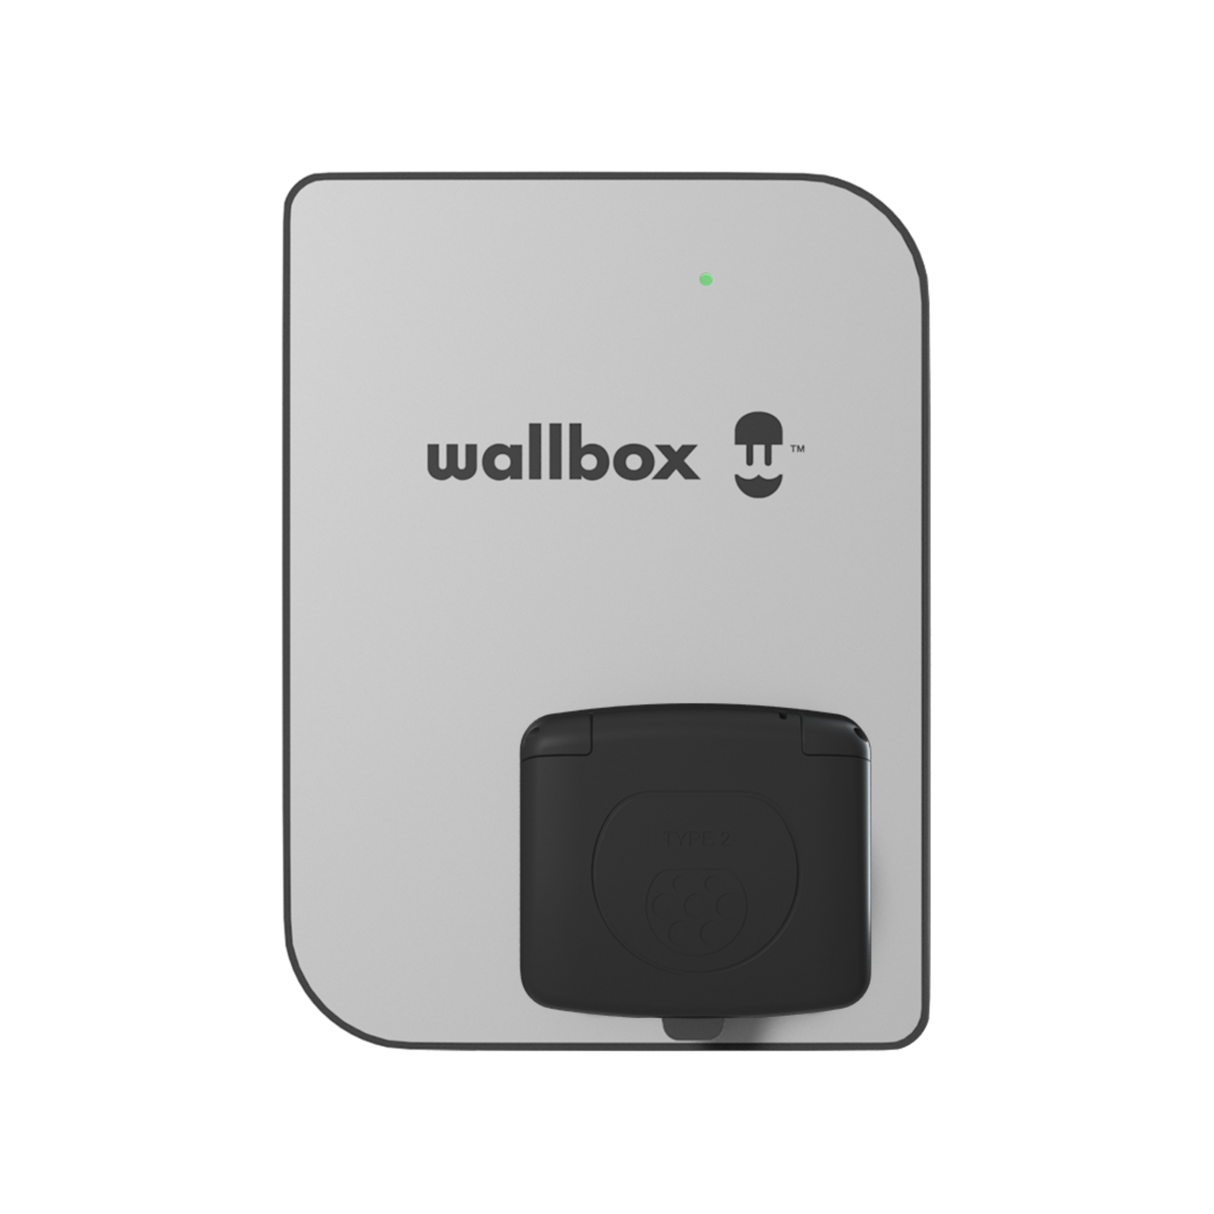 Wallbox Copper SB review 